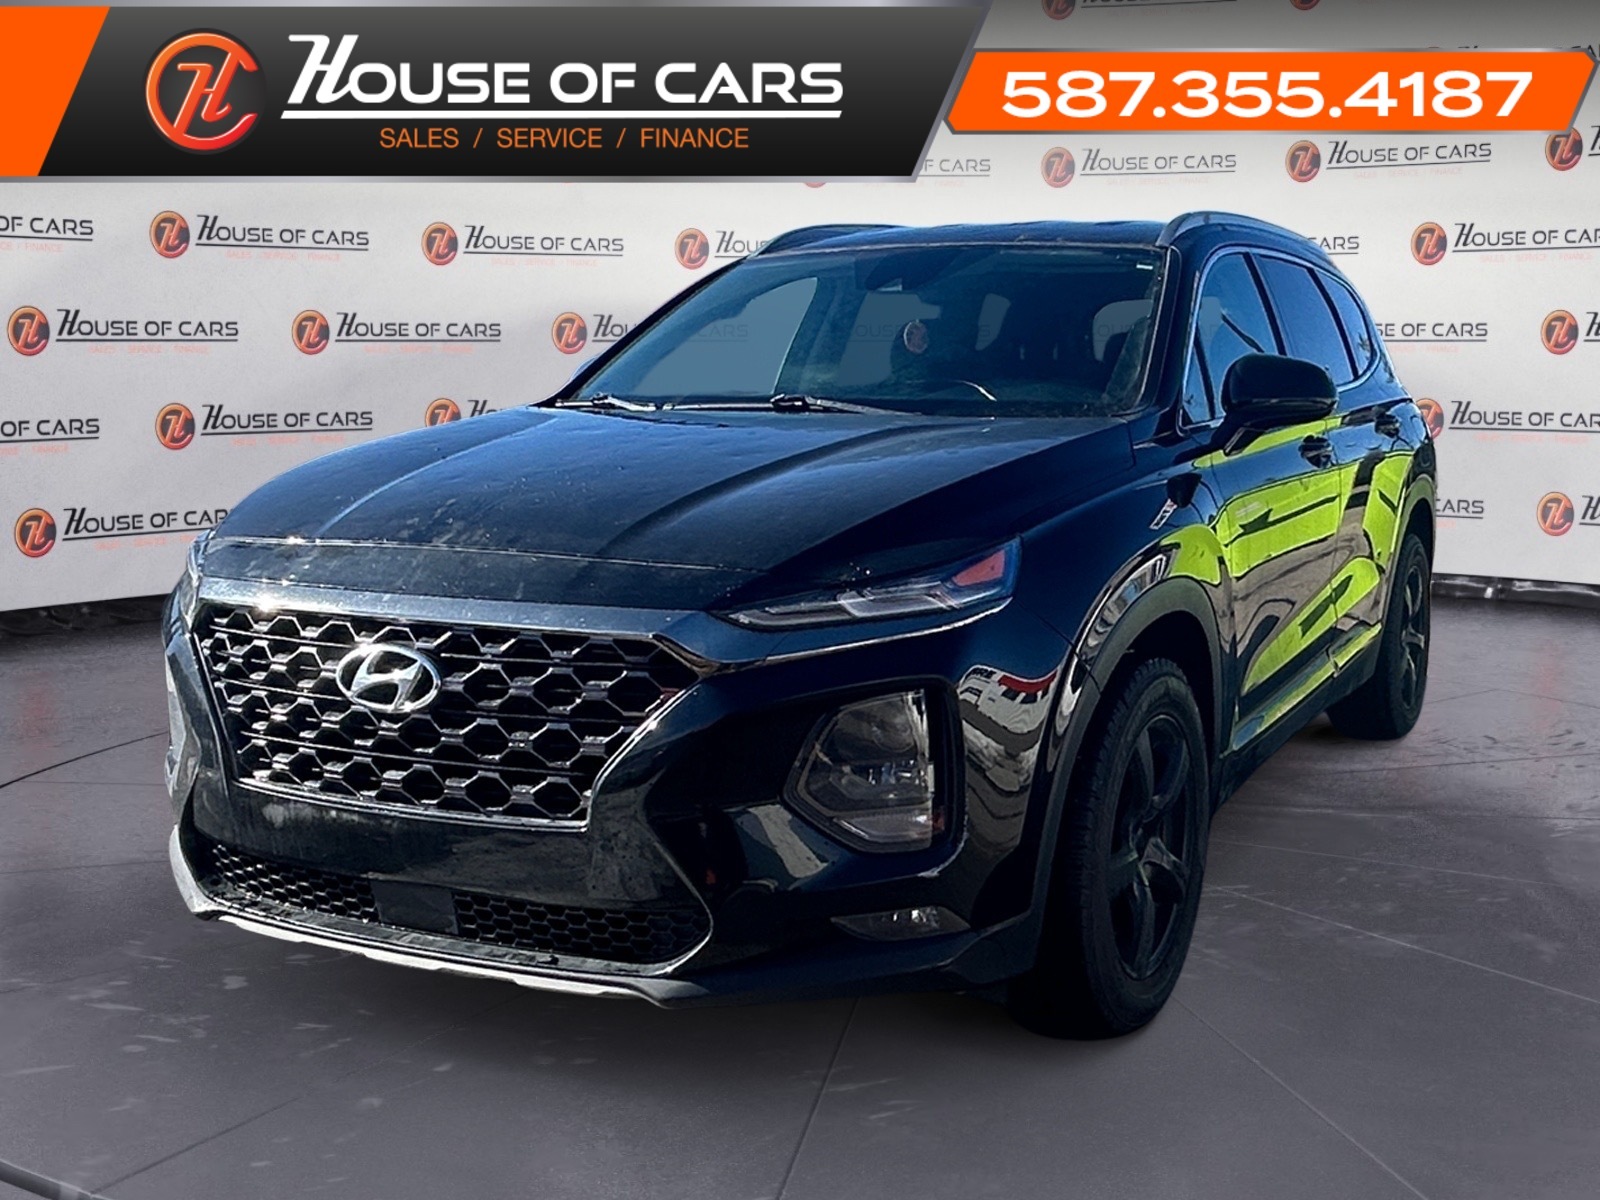 2019 Hyundai Santa Fe 2.4L Essential AWD w-Safety Pkg-Dk Chrome Accent